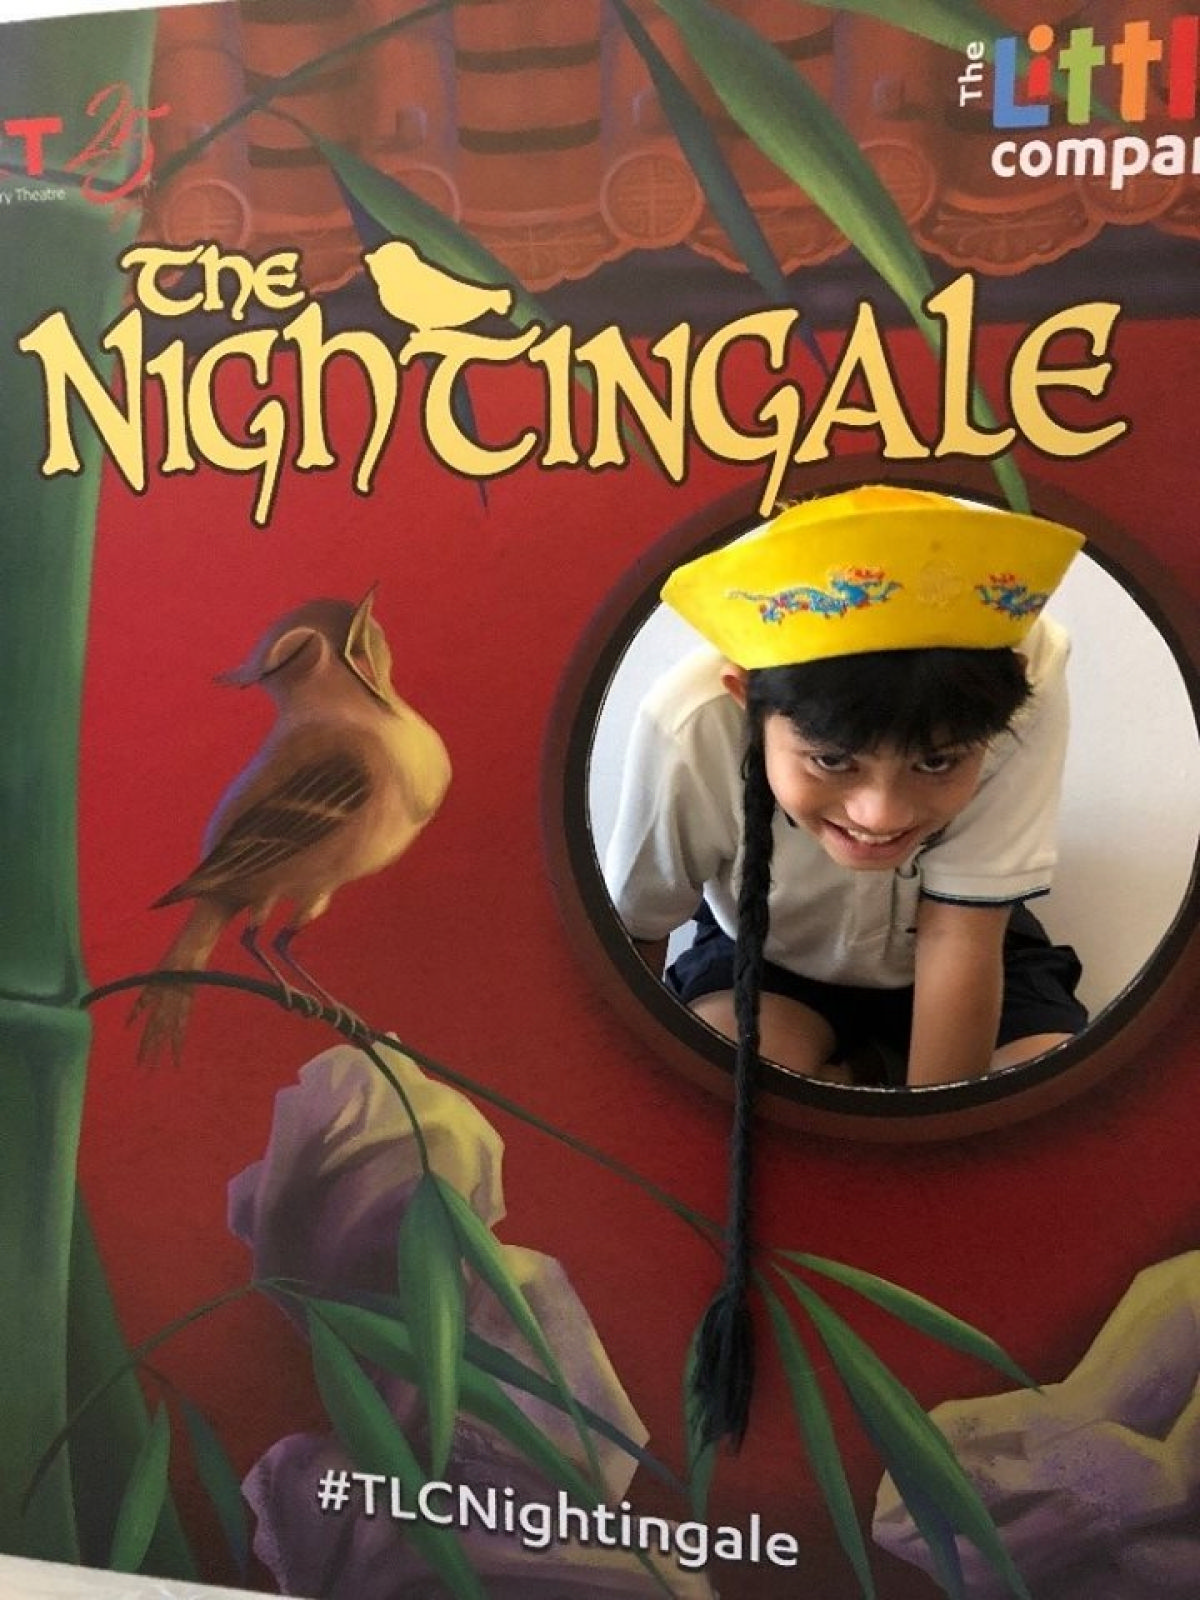 The Nightingale Sings the Joy of English